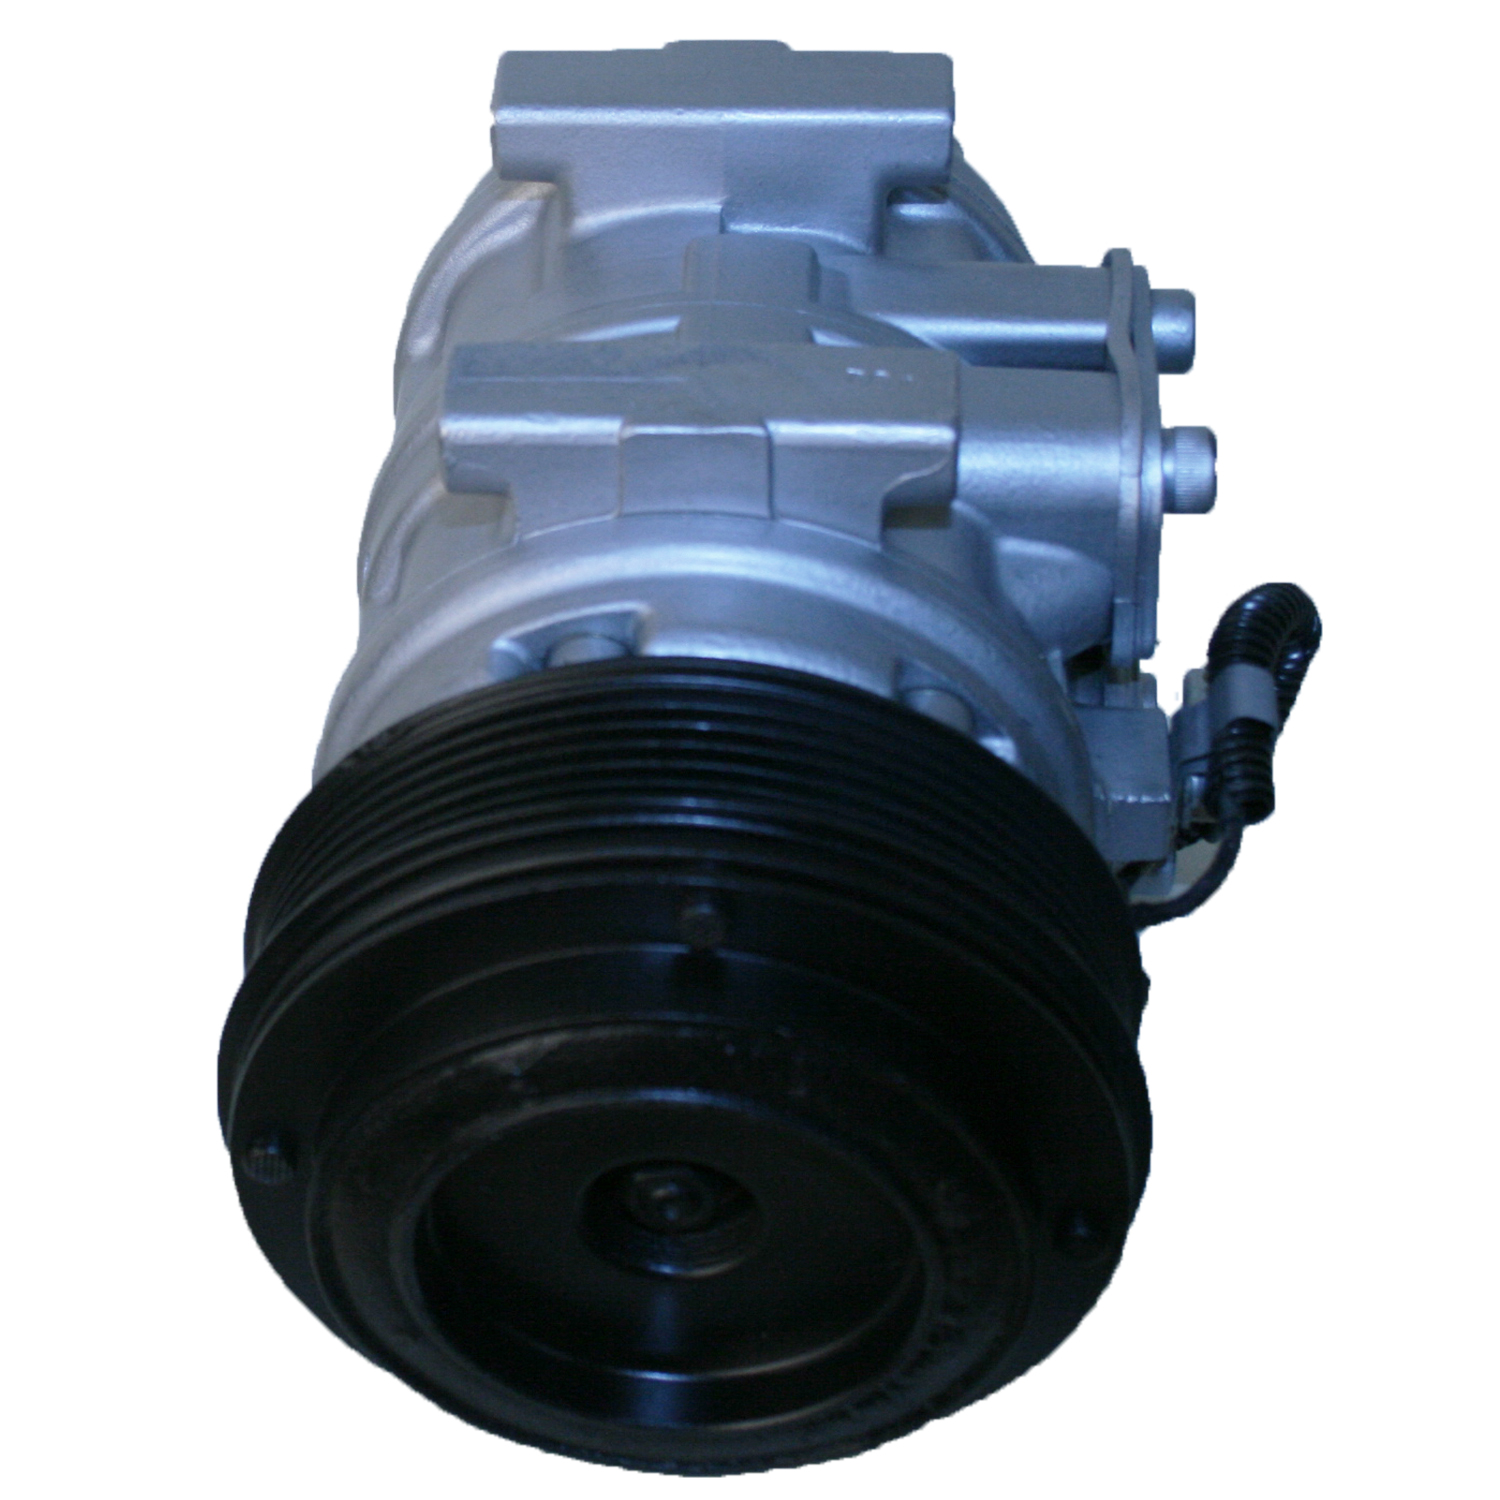 TCW Compressor 31050.601 Remanufactured Product Image field_60b6a13a6e67c